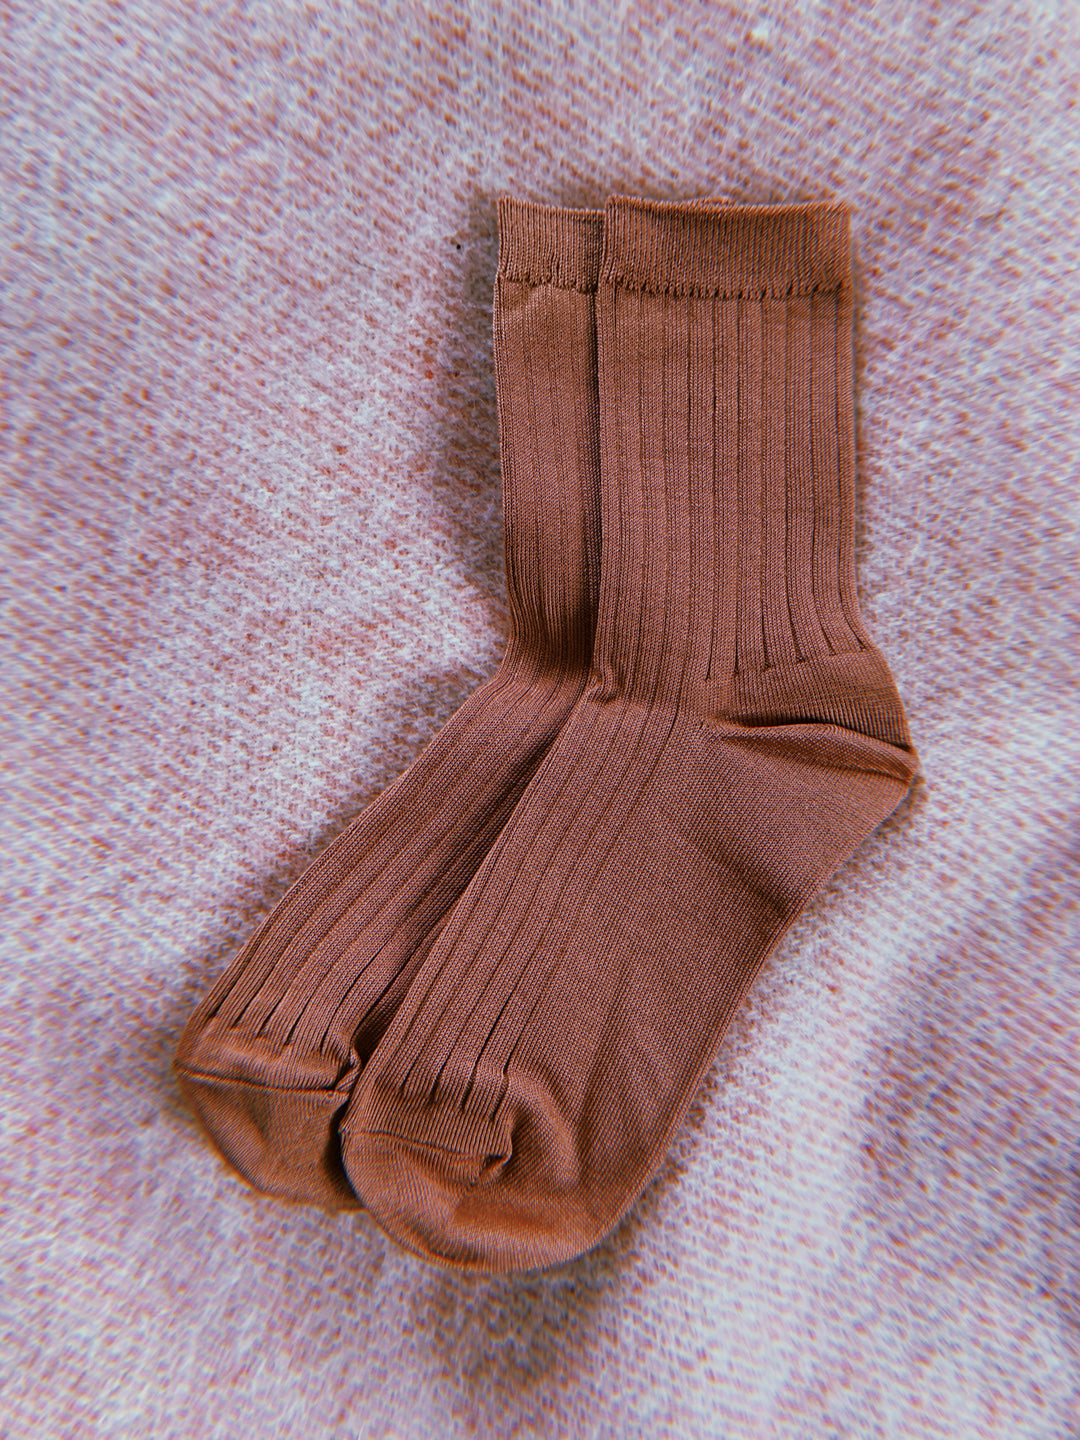 Twentyseven Toronto - Le Bon Shoppe Her Socks (MC Cotton) - Nude peach